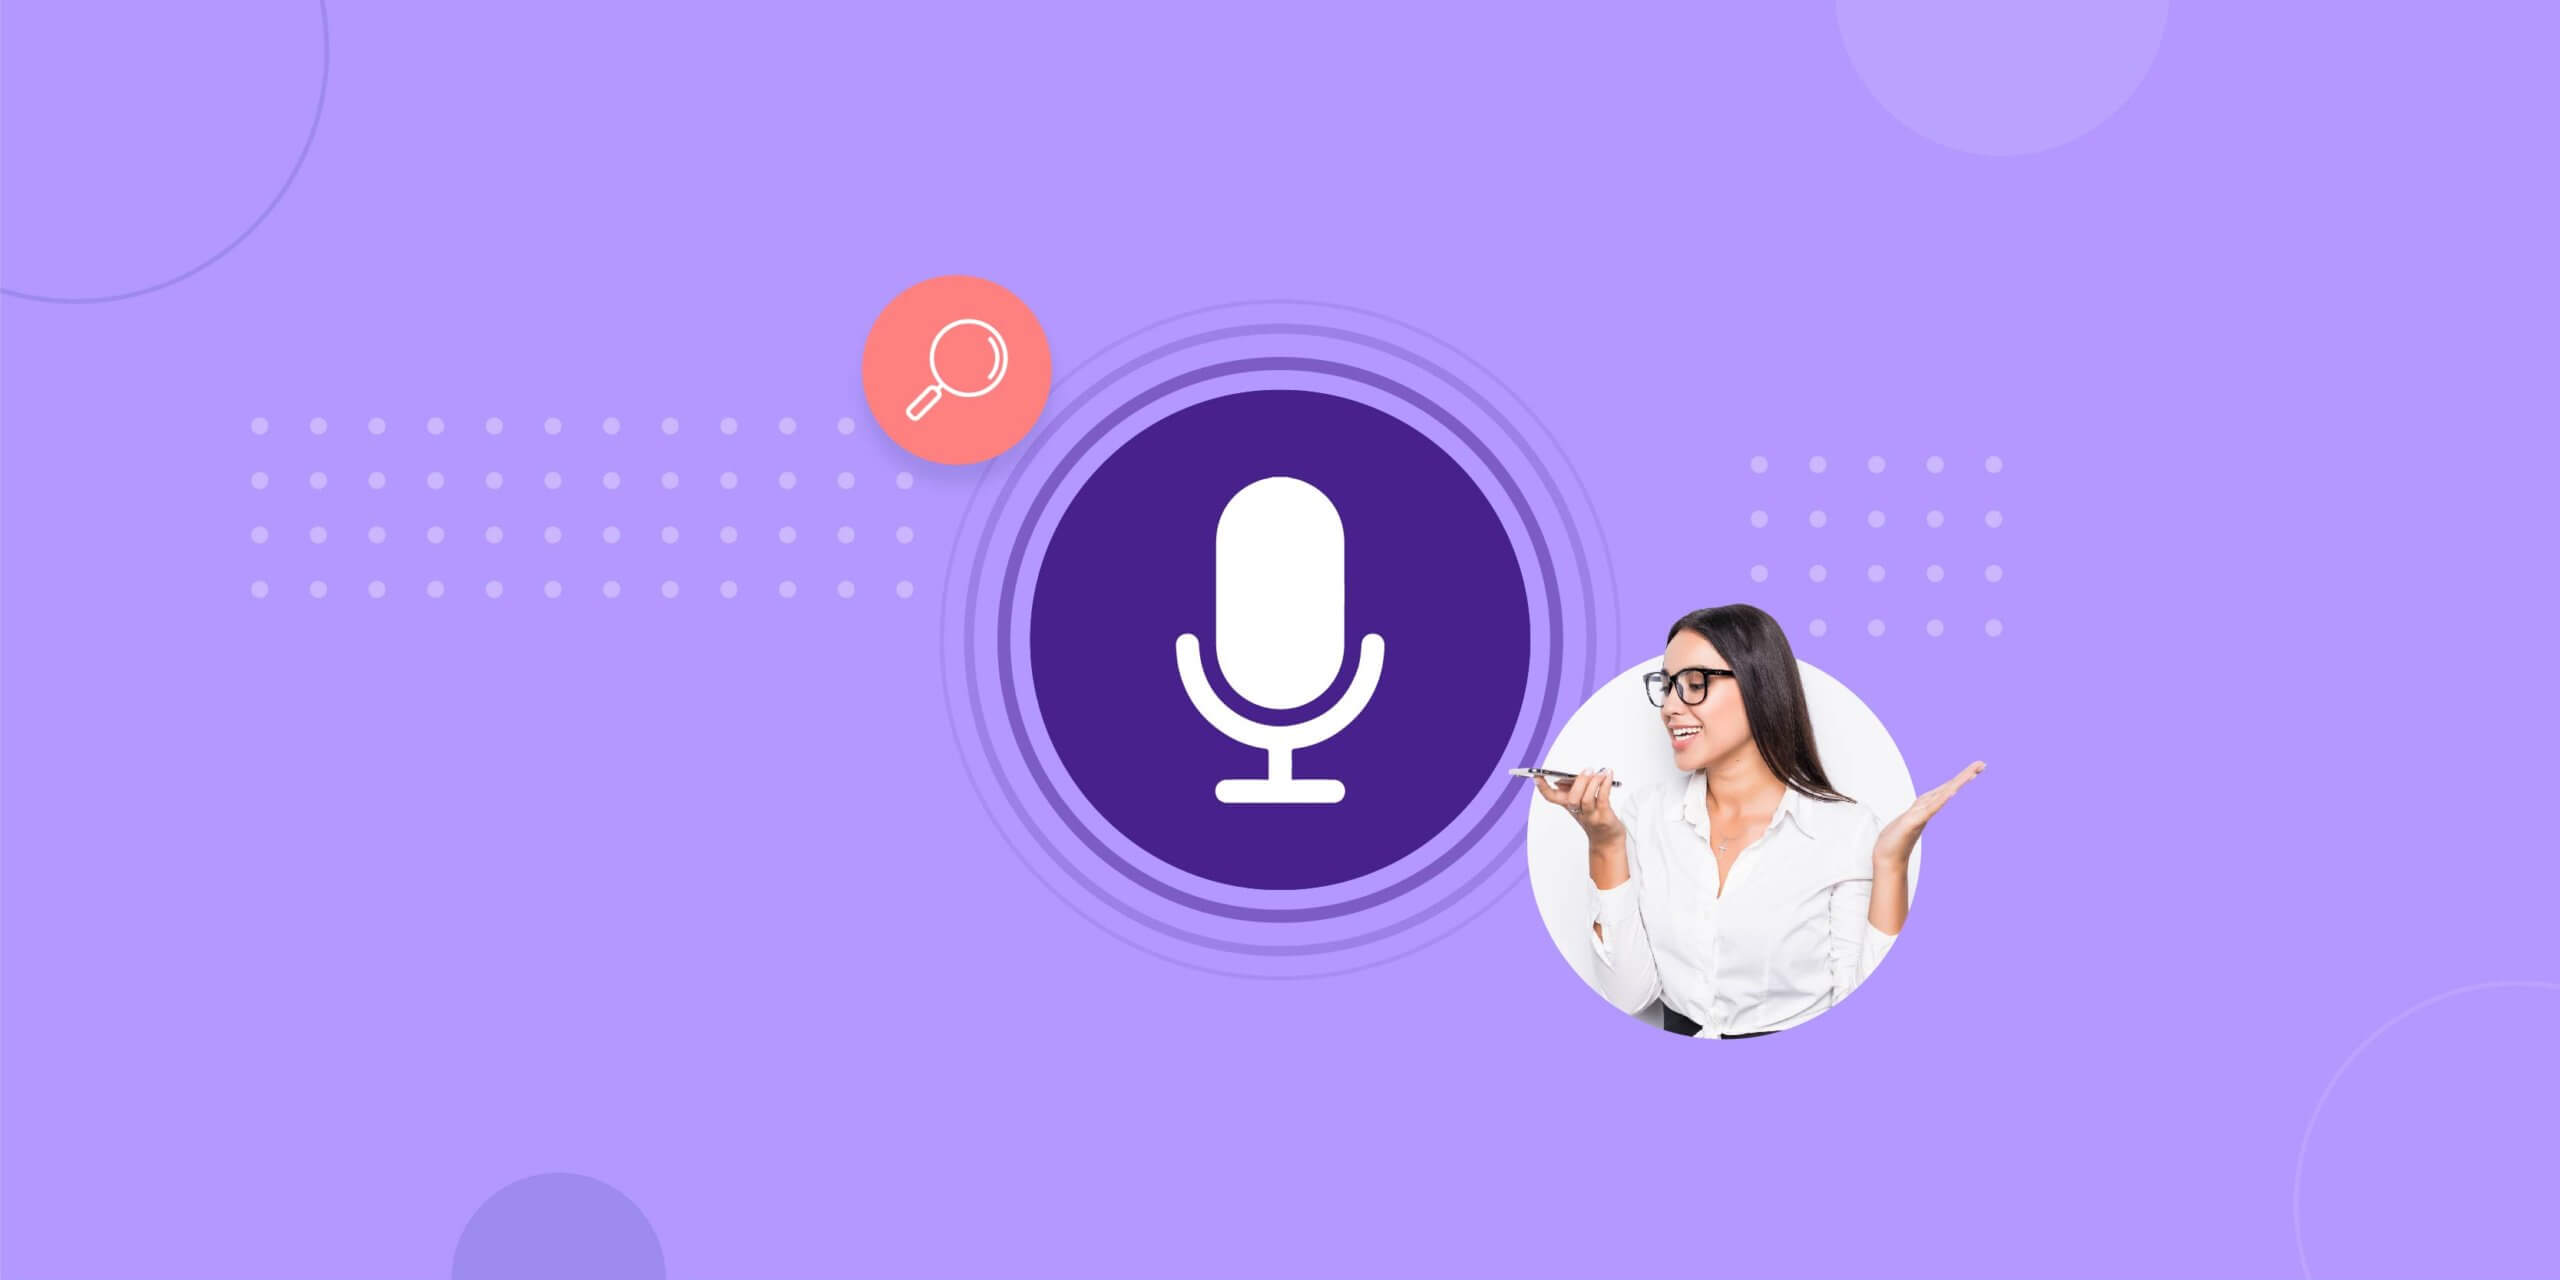 Google Assistant Voice Chatbot: Key Features & Future